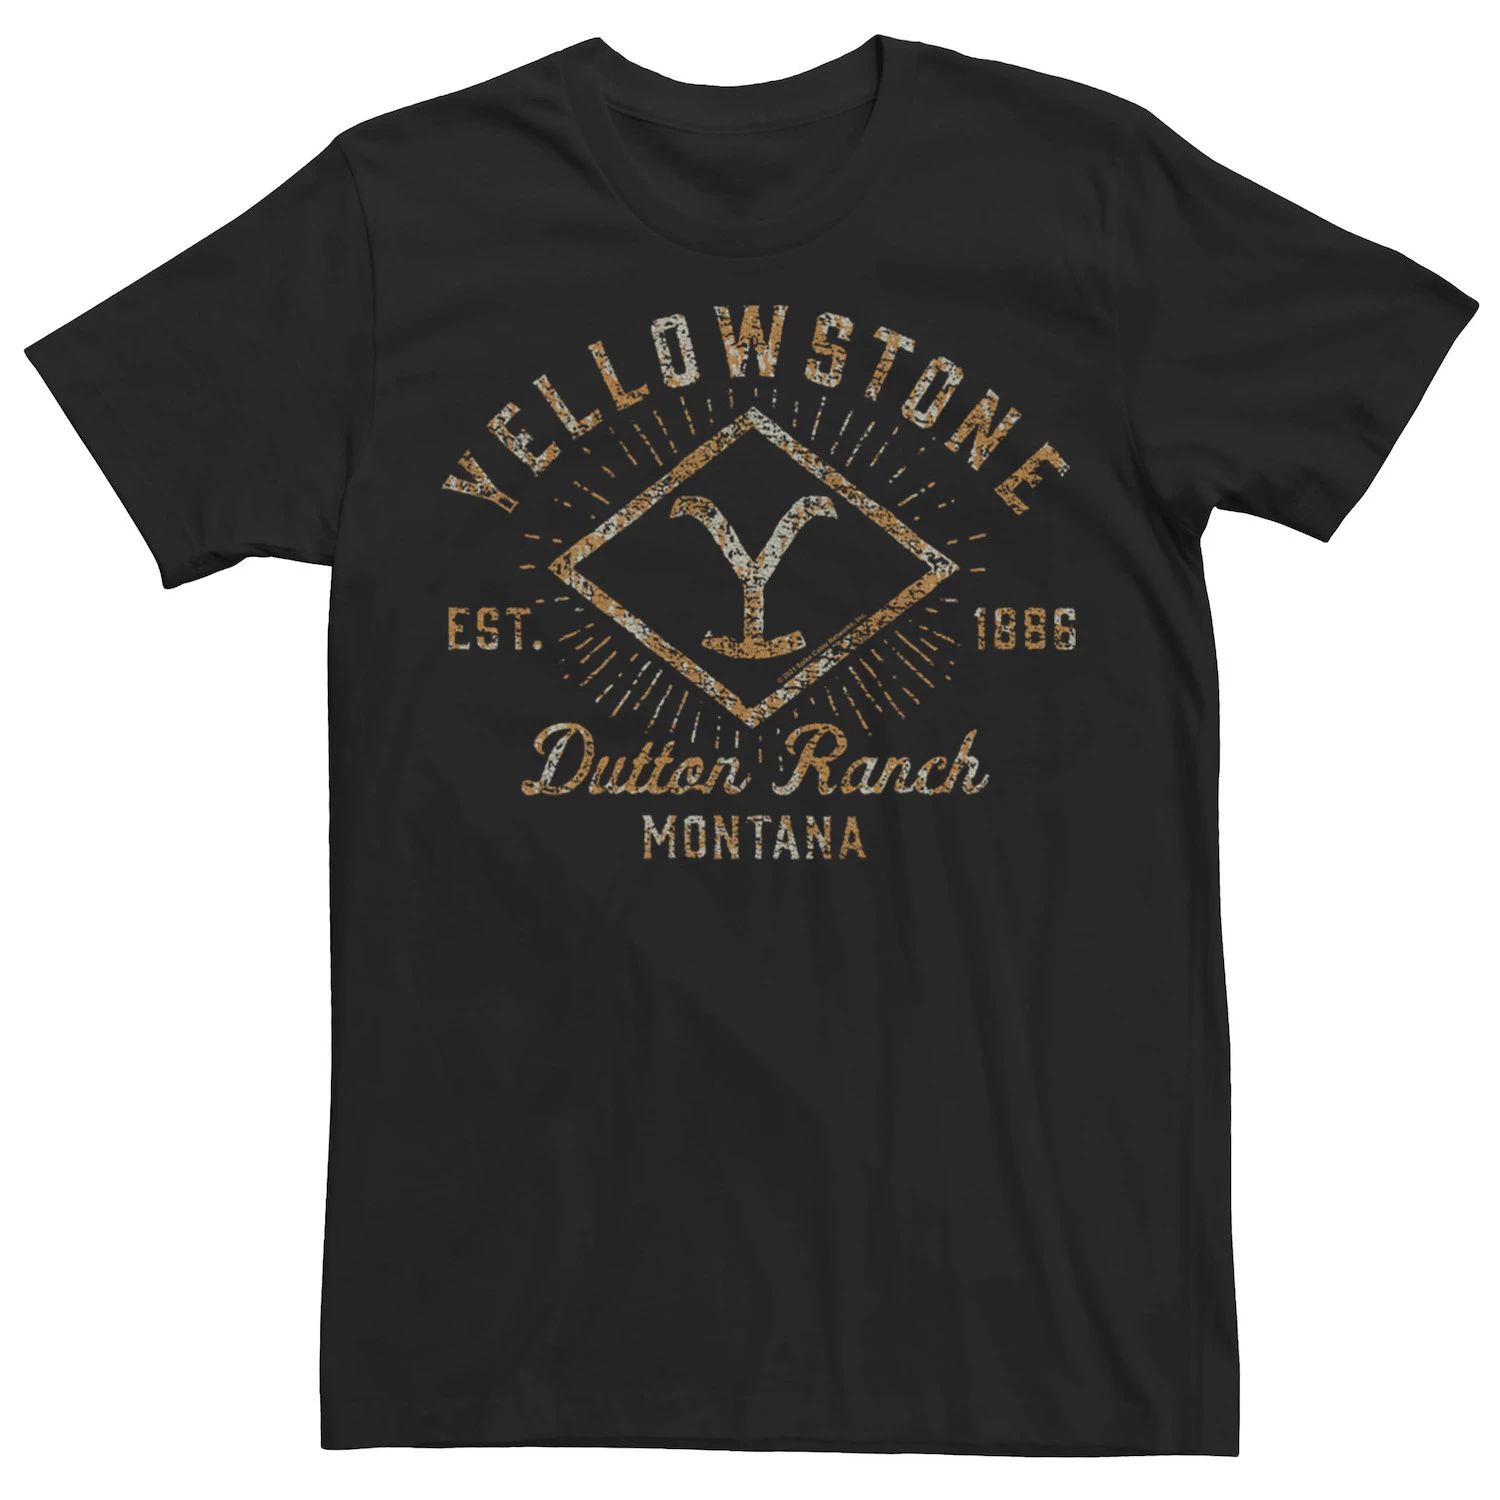 Мужская футболка с потертым логотипом Yellowstone Dutton Ranch Licensed Character